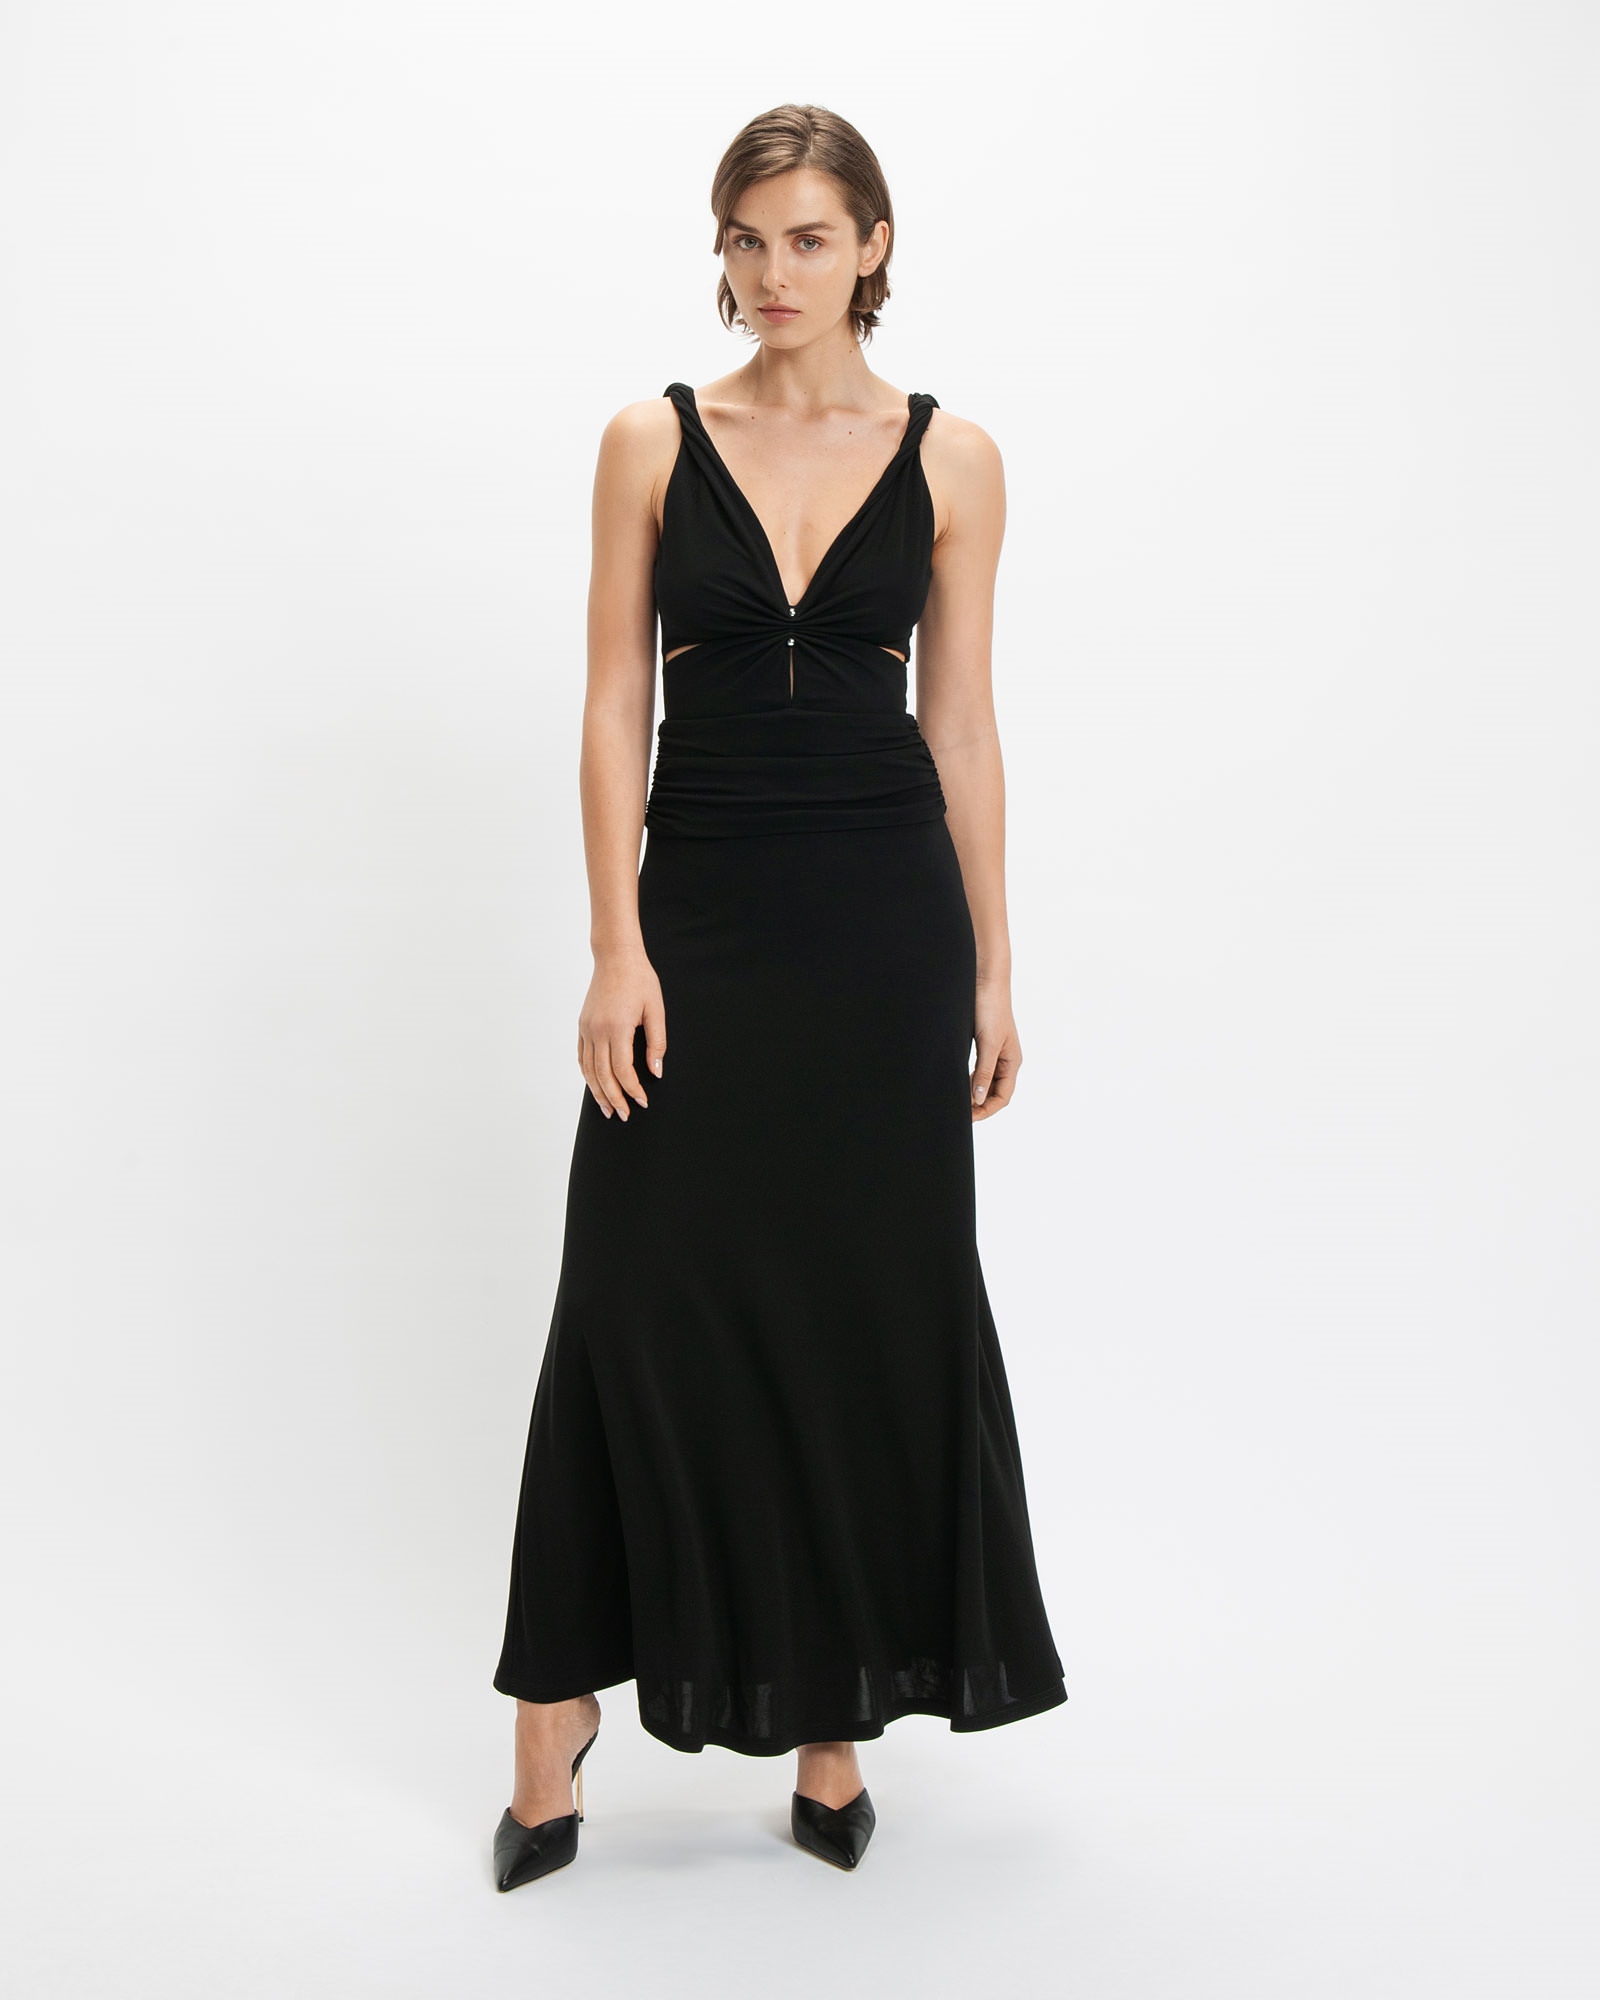 Cut-Out Jersey Dress | Buy Dresses Online - Cue